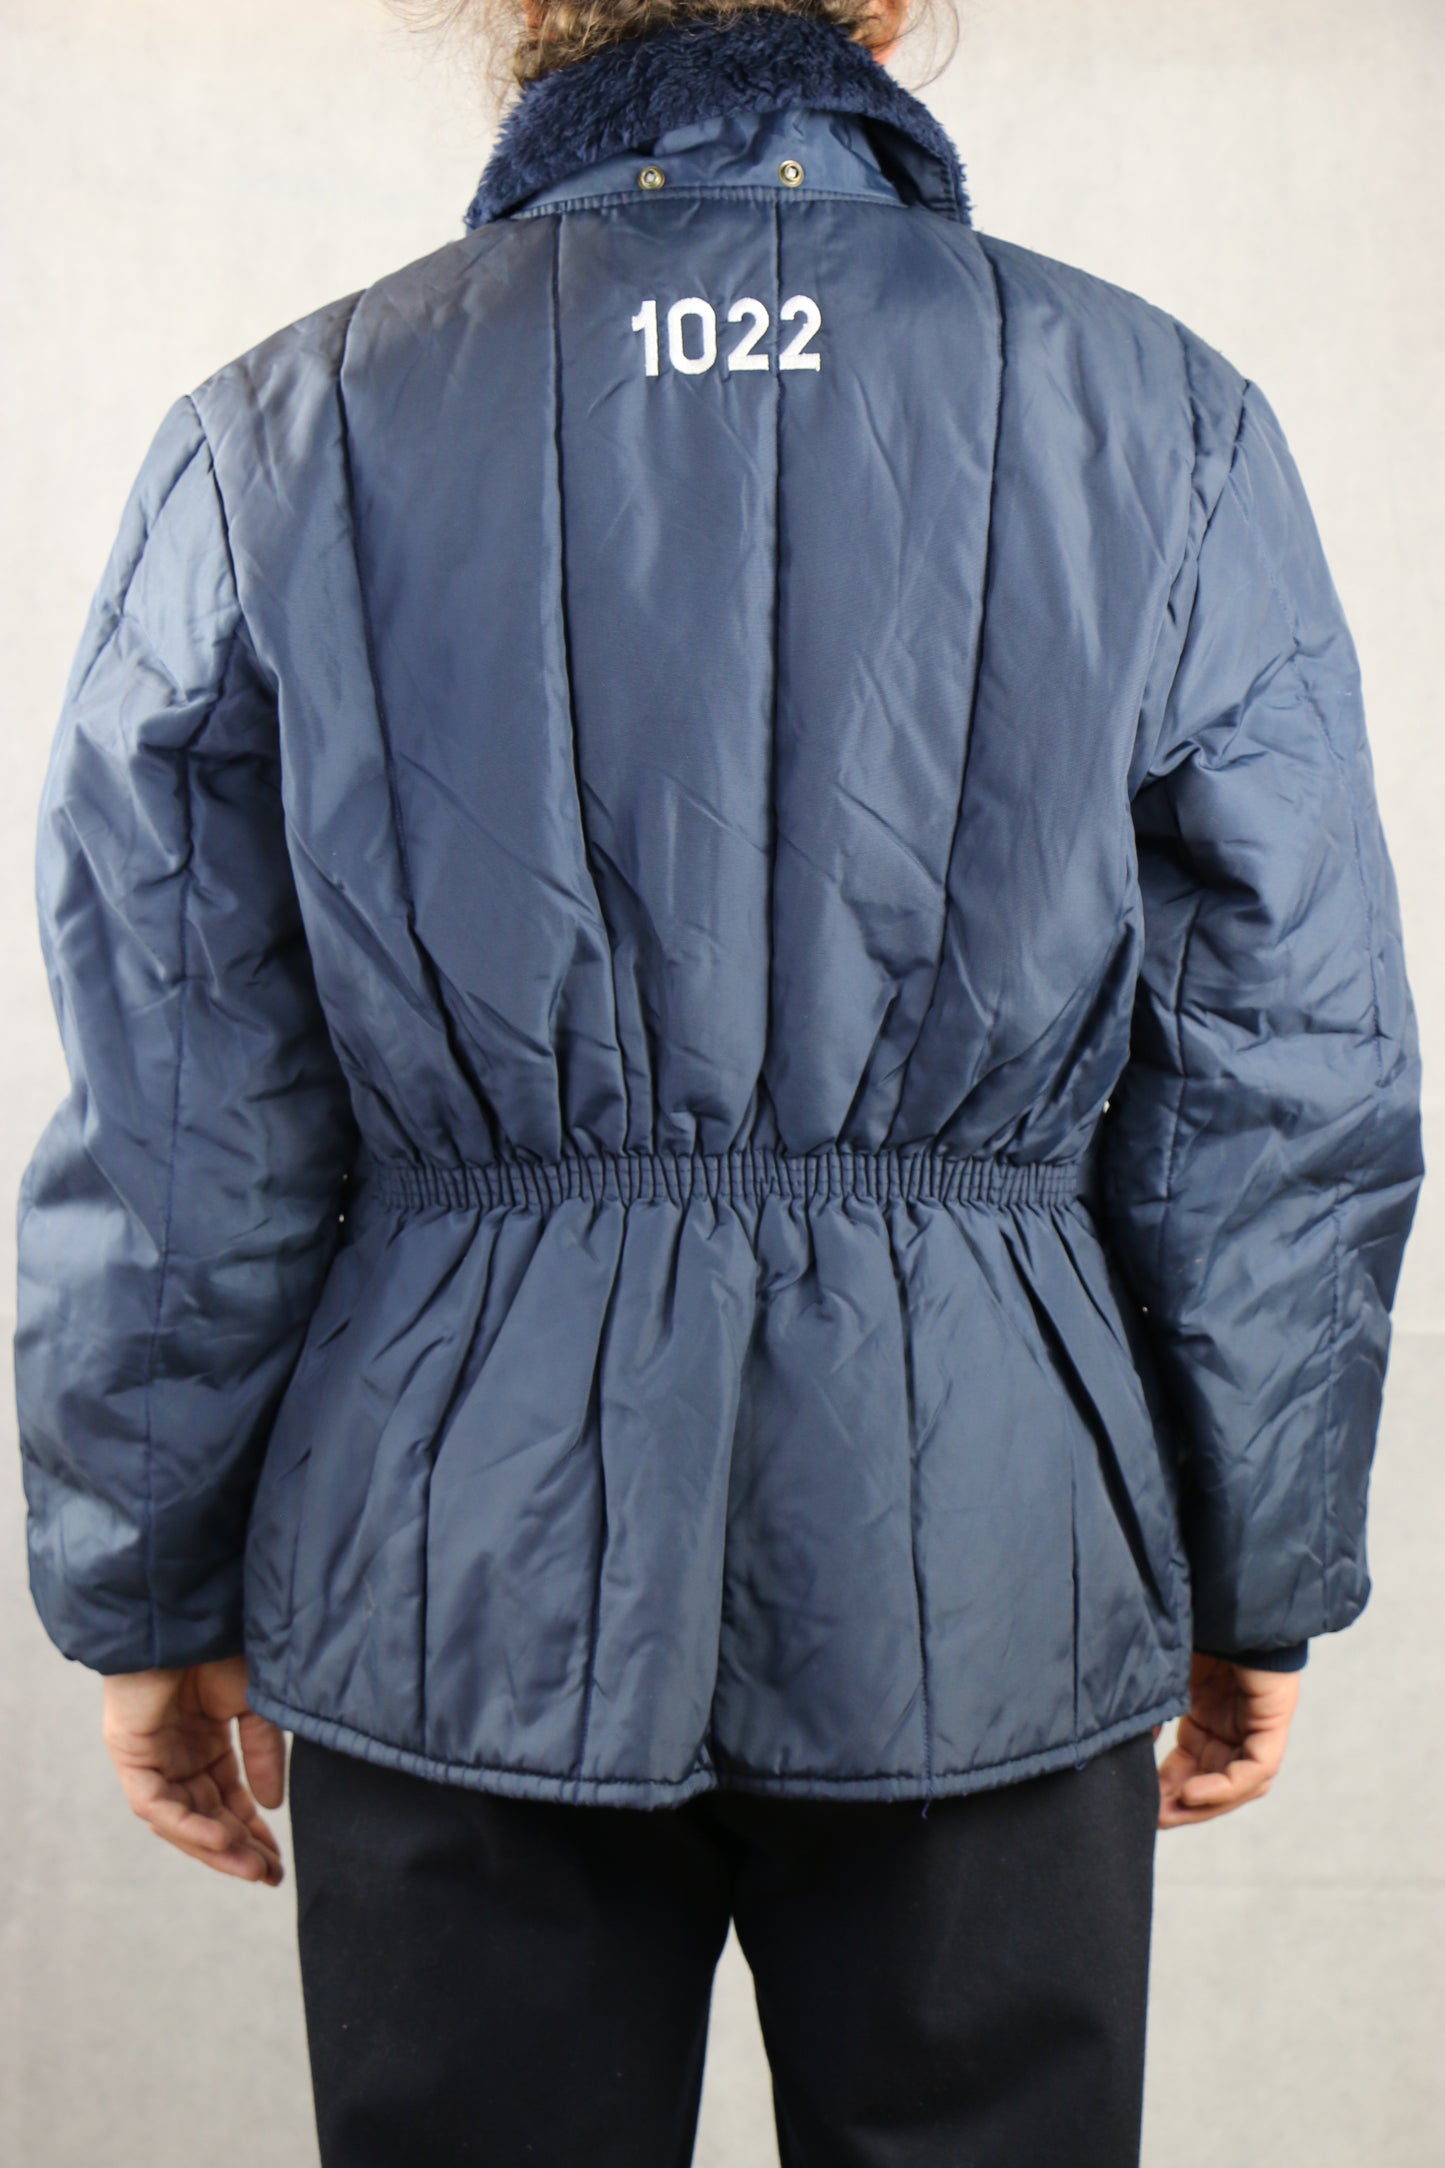 Samco Sportswear Co. Winter Jacket, clochard92.com